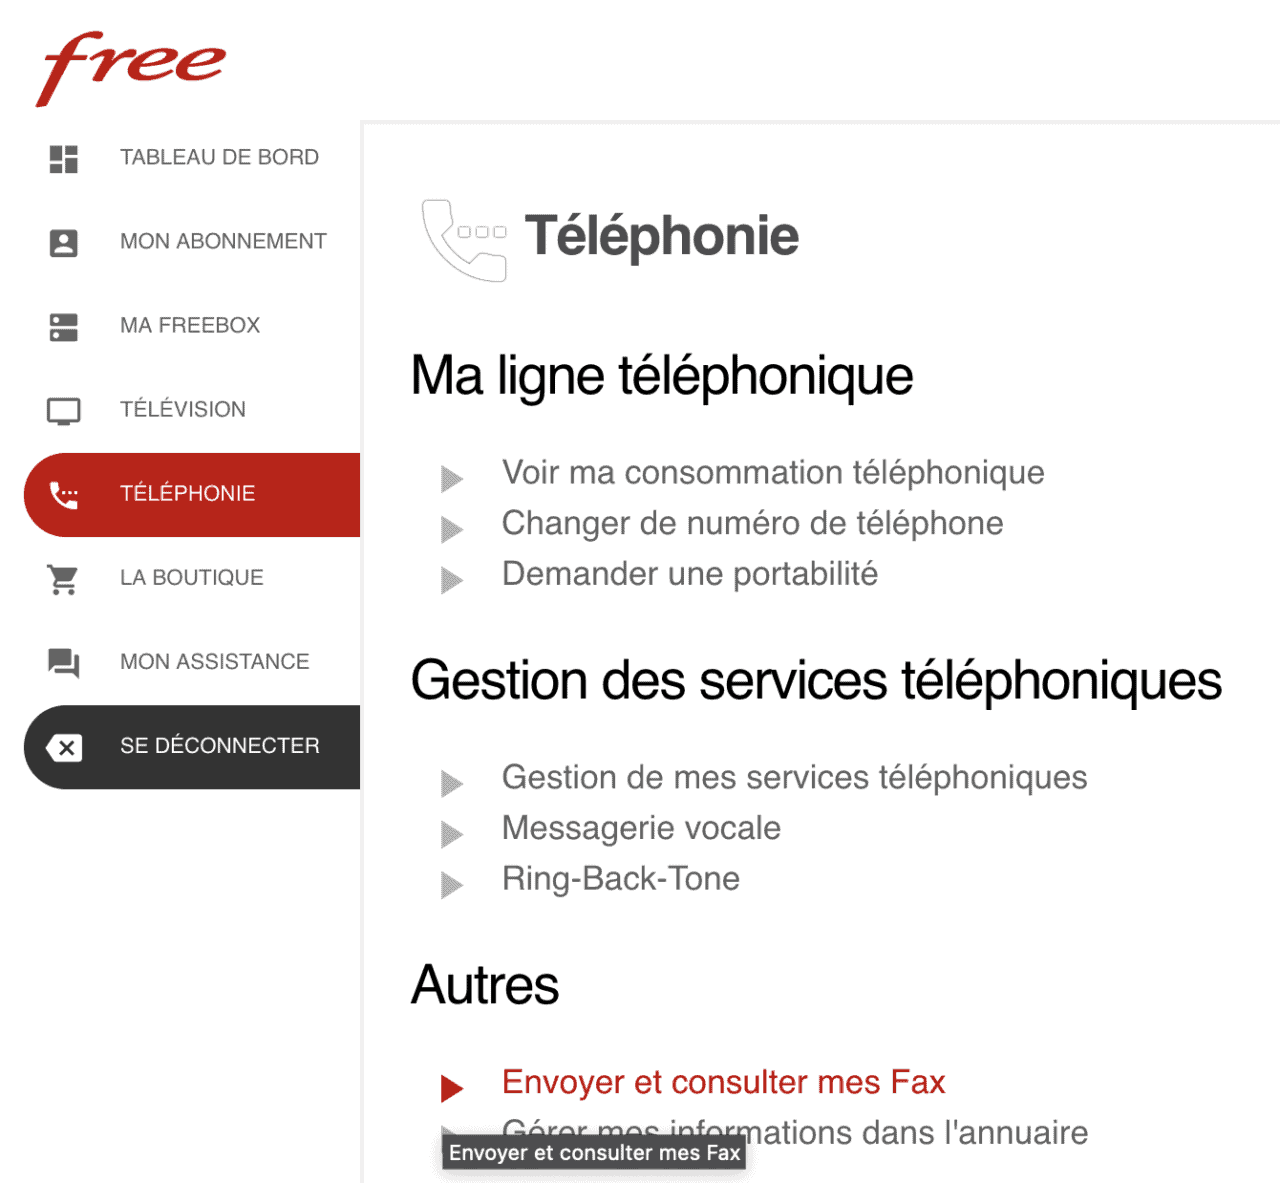 free telephonie fax